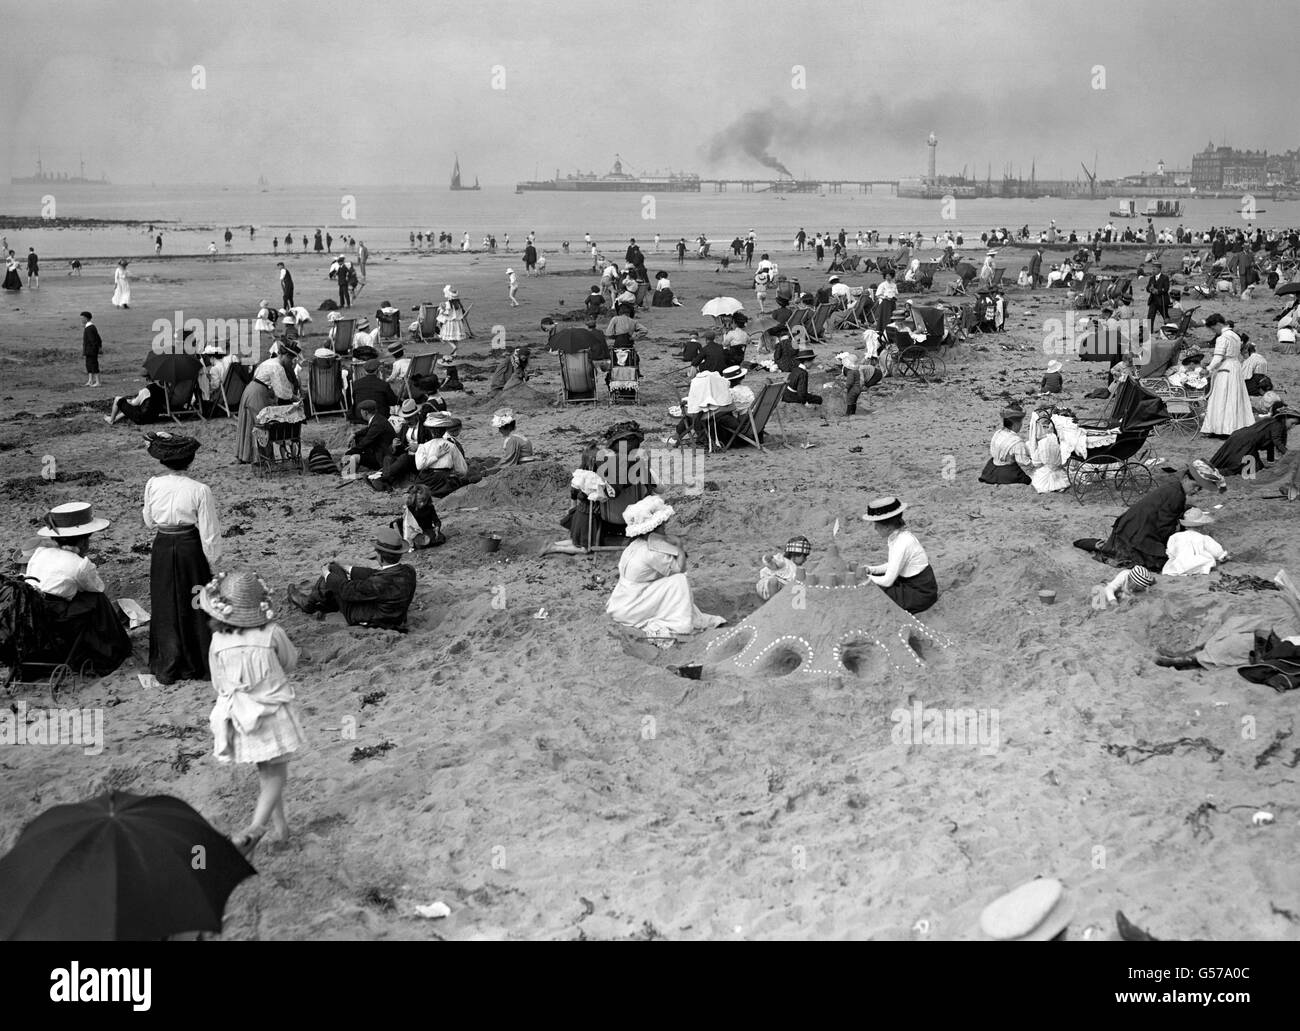 MARGATE c1910: Edwardian holidaymakers enjoying themselves at the seaside at Margate, Kent. Stock Photo